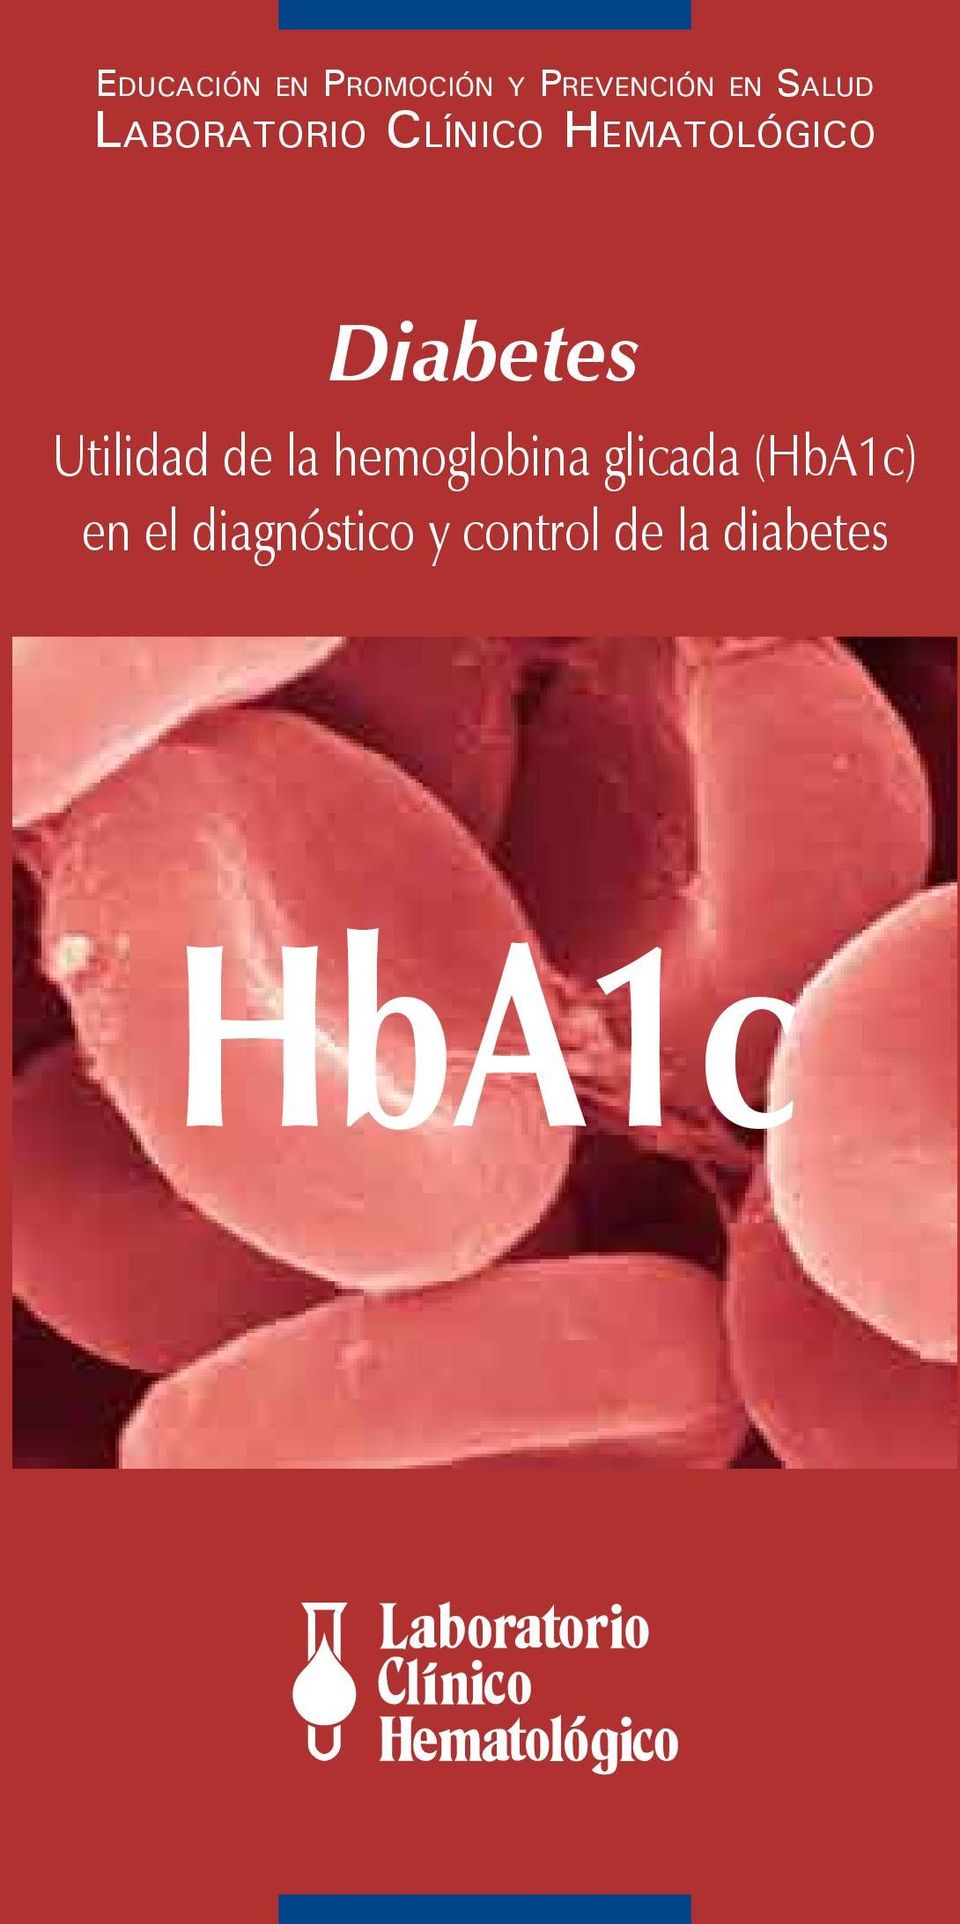 Hematológico Diabetes Utilidad de la hemoglobina